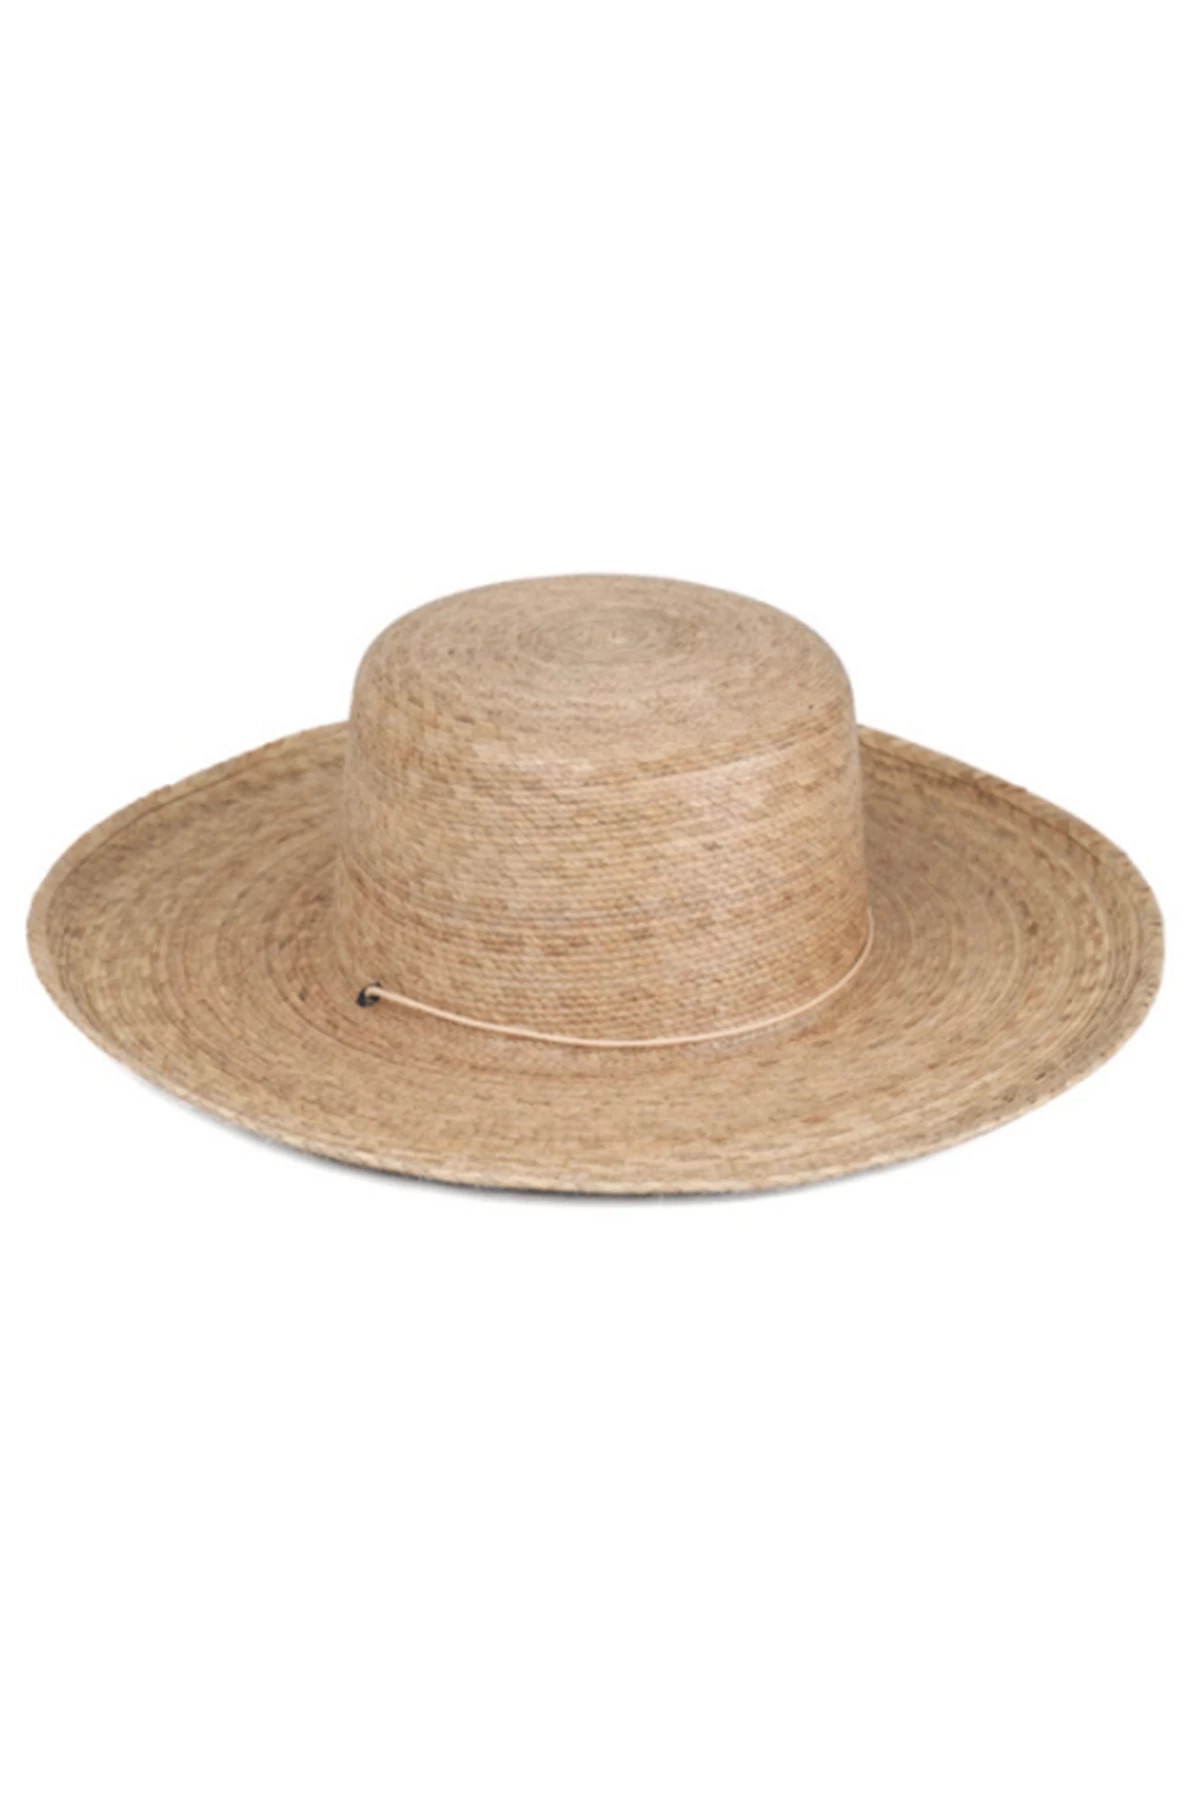 NATURAL Island Palma Boater Hat image number 2